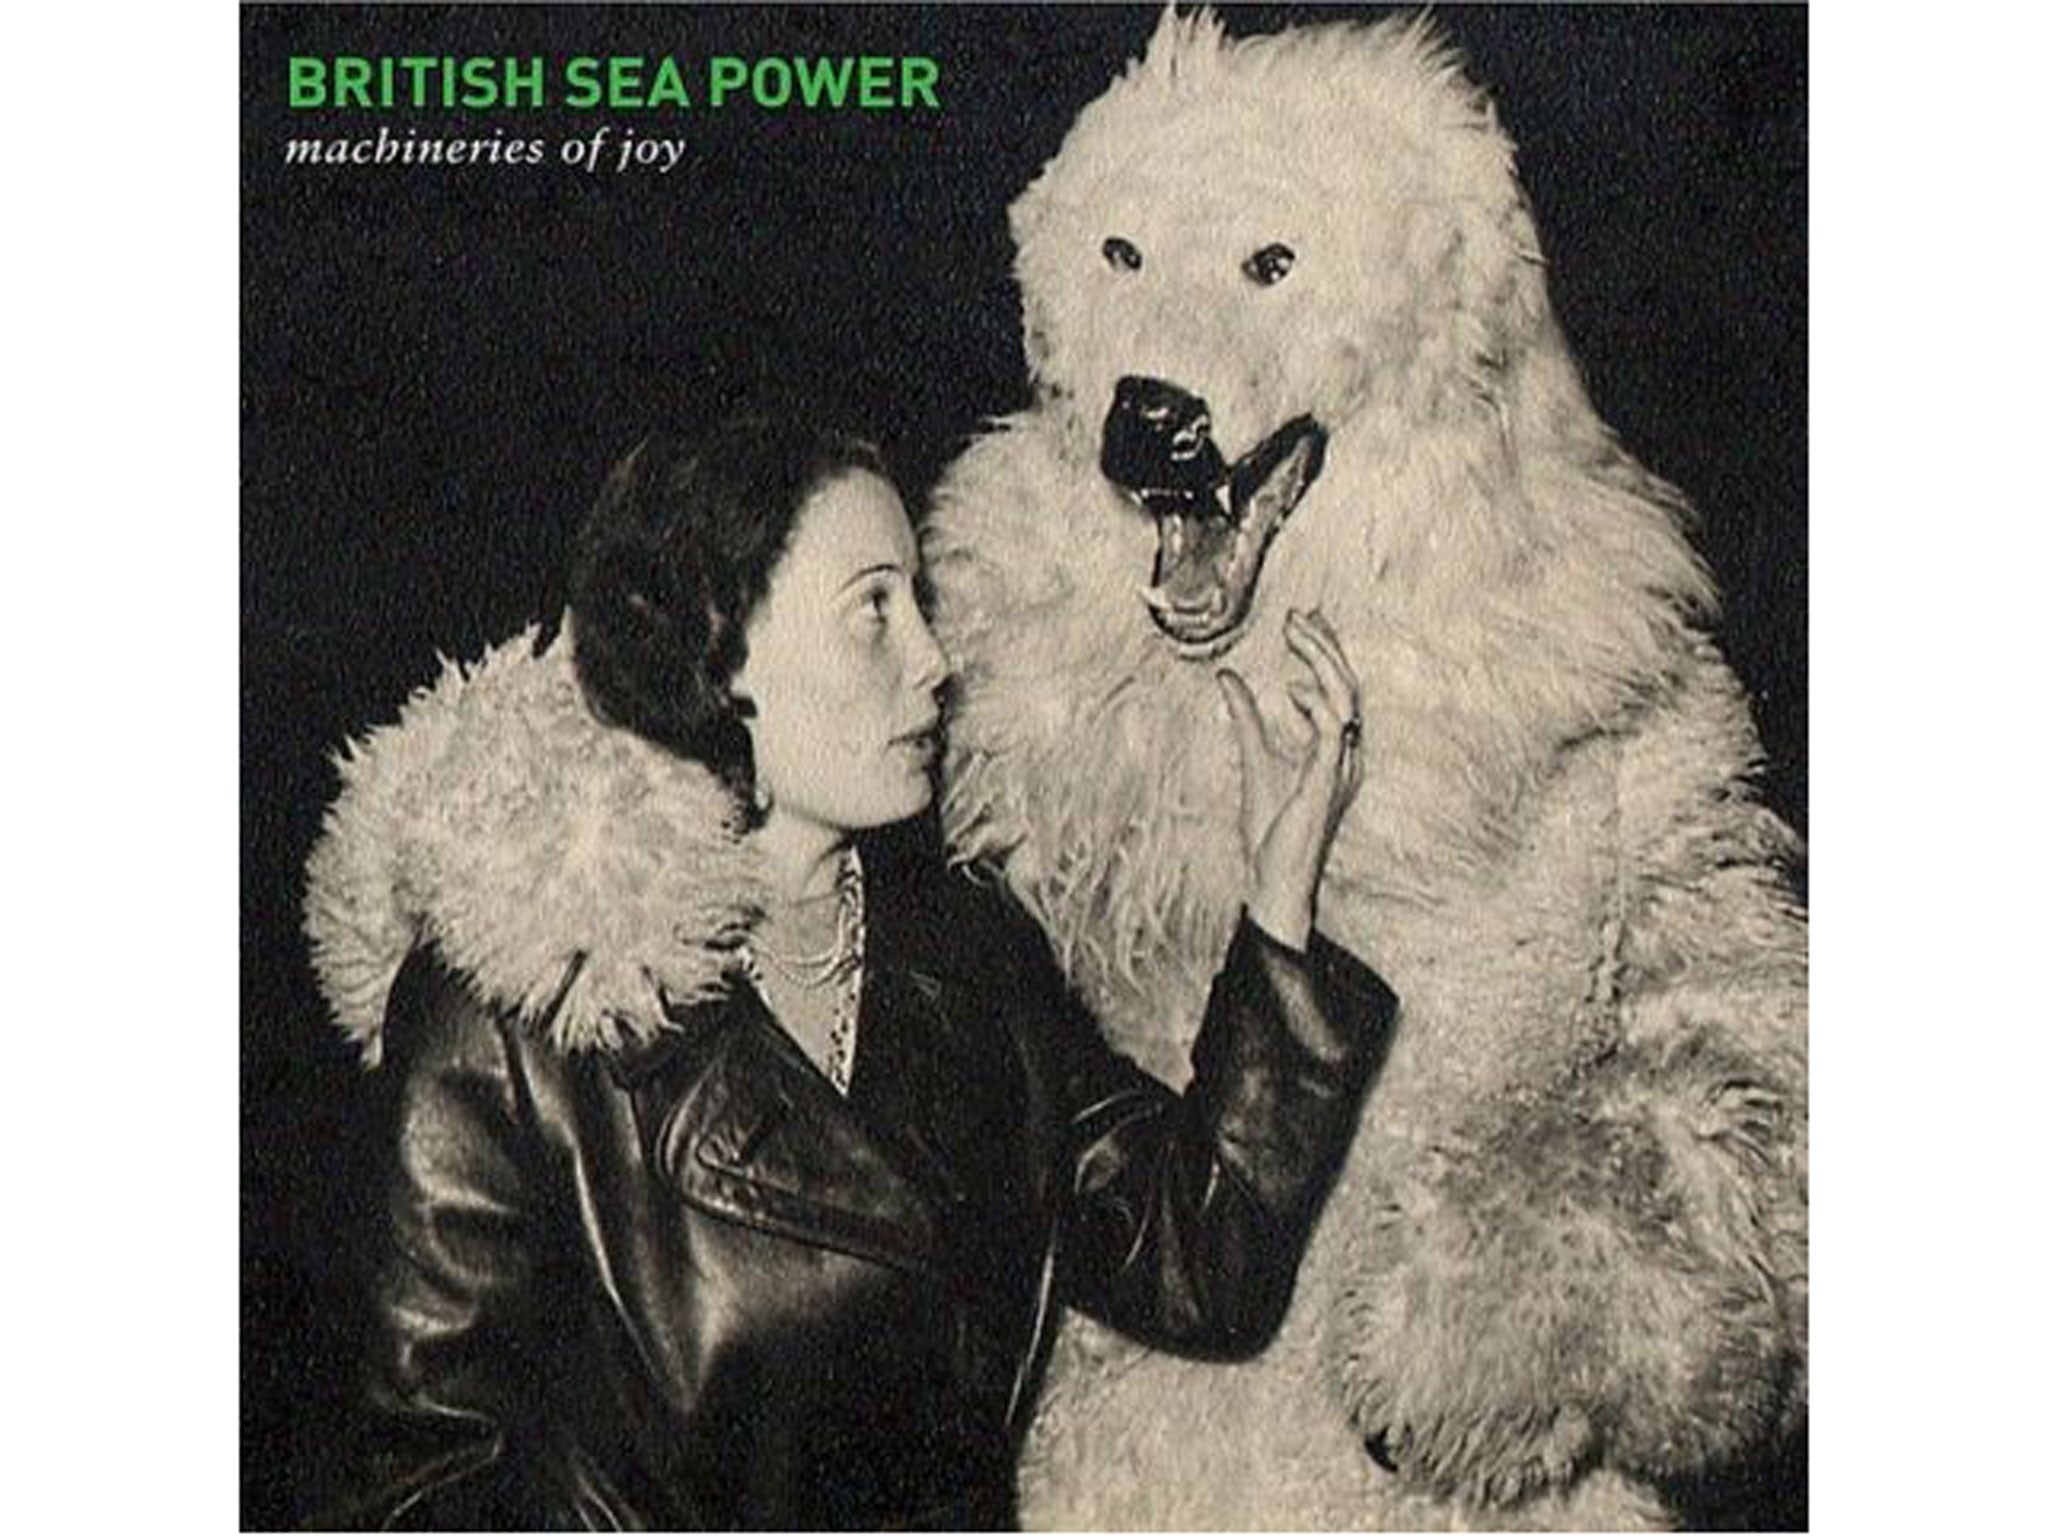 British Sea Power, Machineries of Joy (Rough Trade)